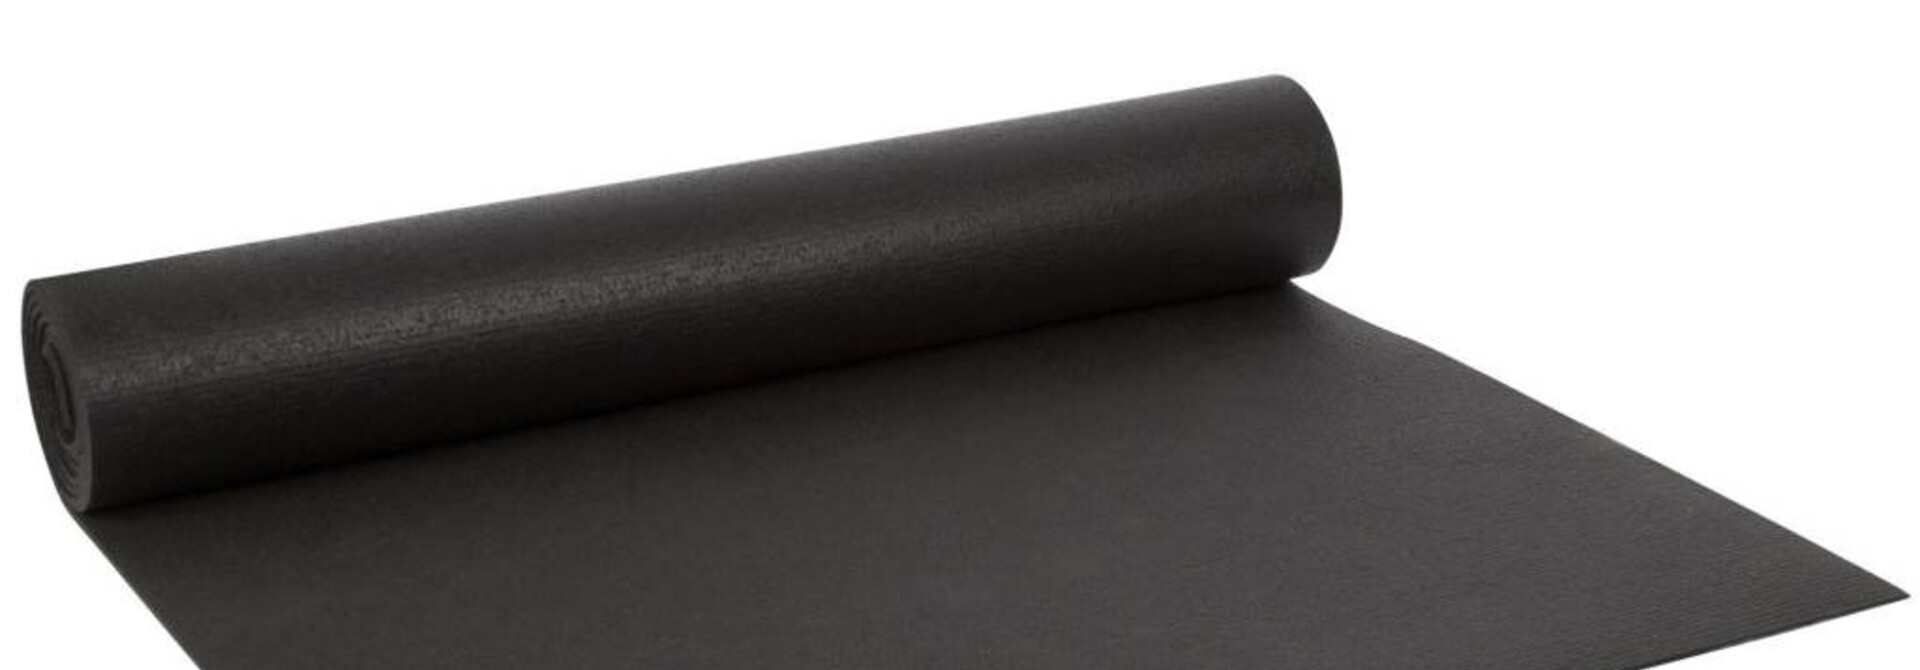 Yogisha Studio Yoga Mat Extra Wide - Black